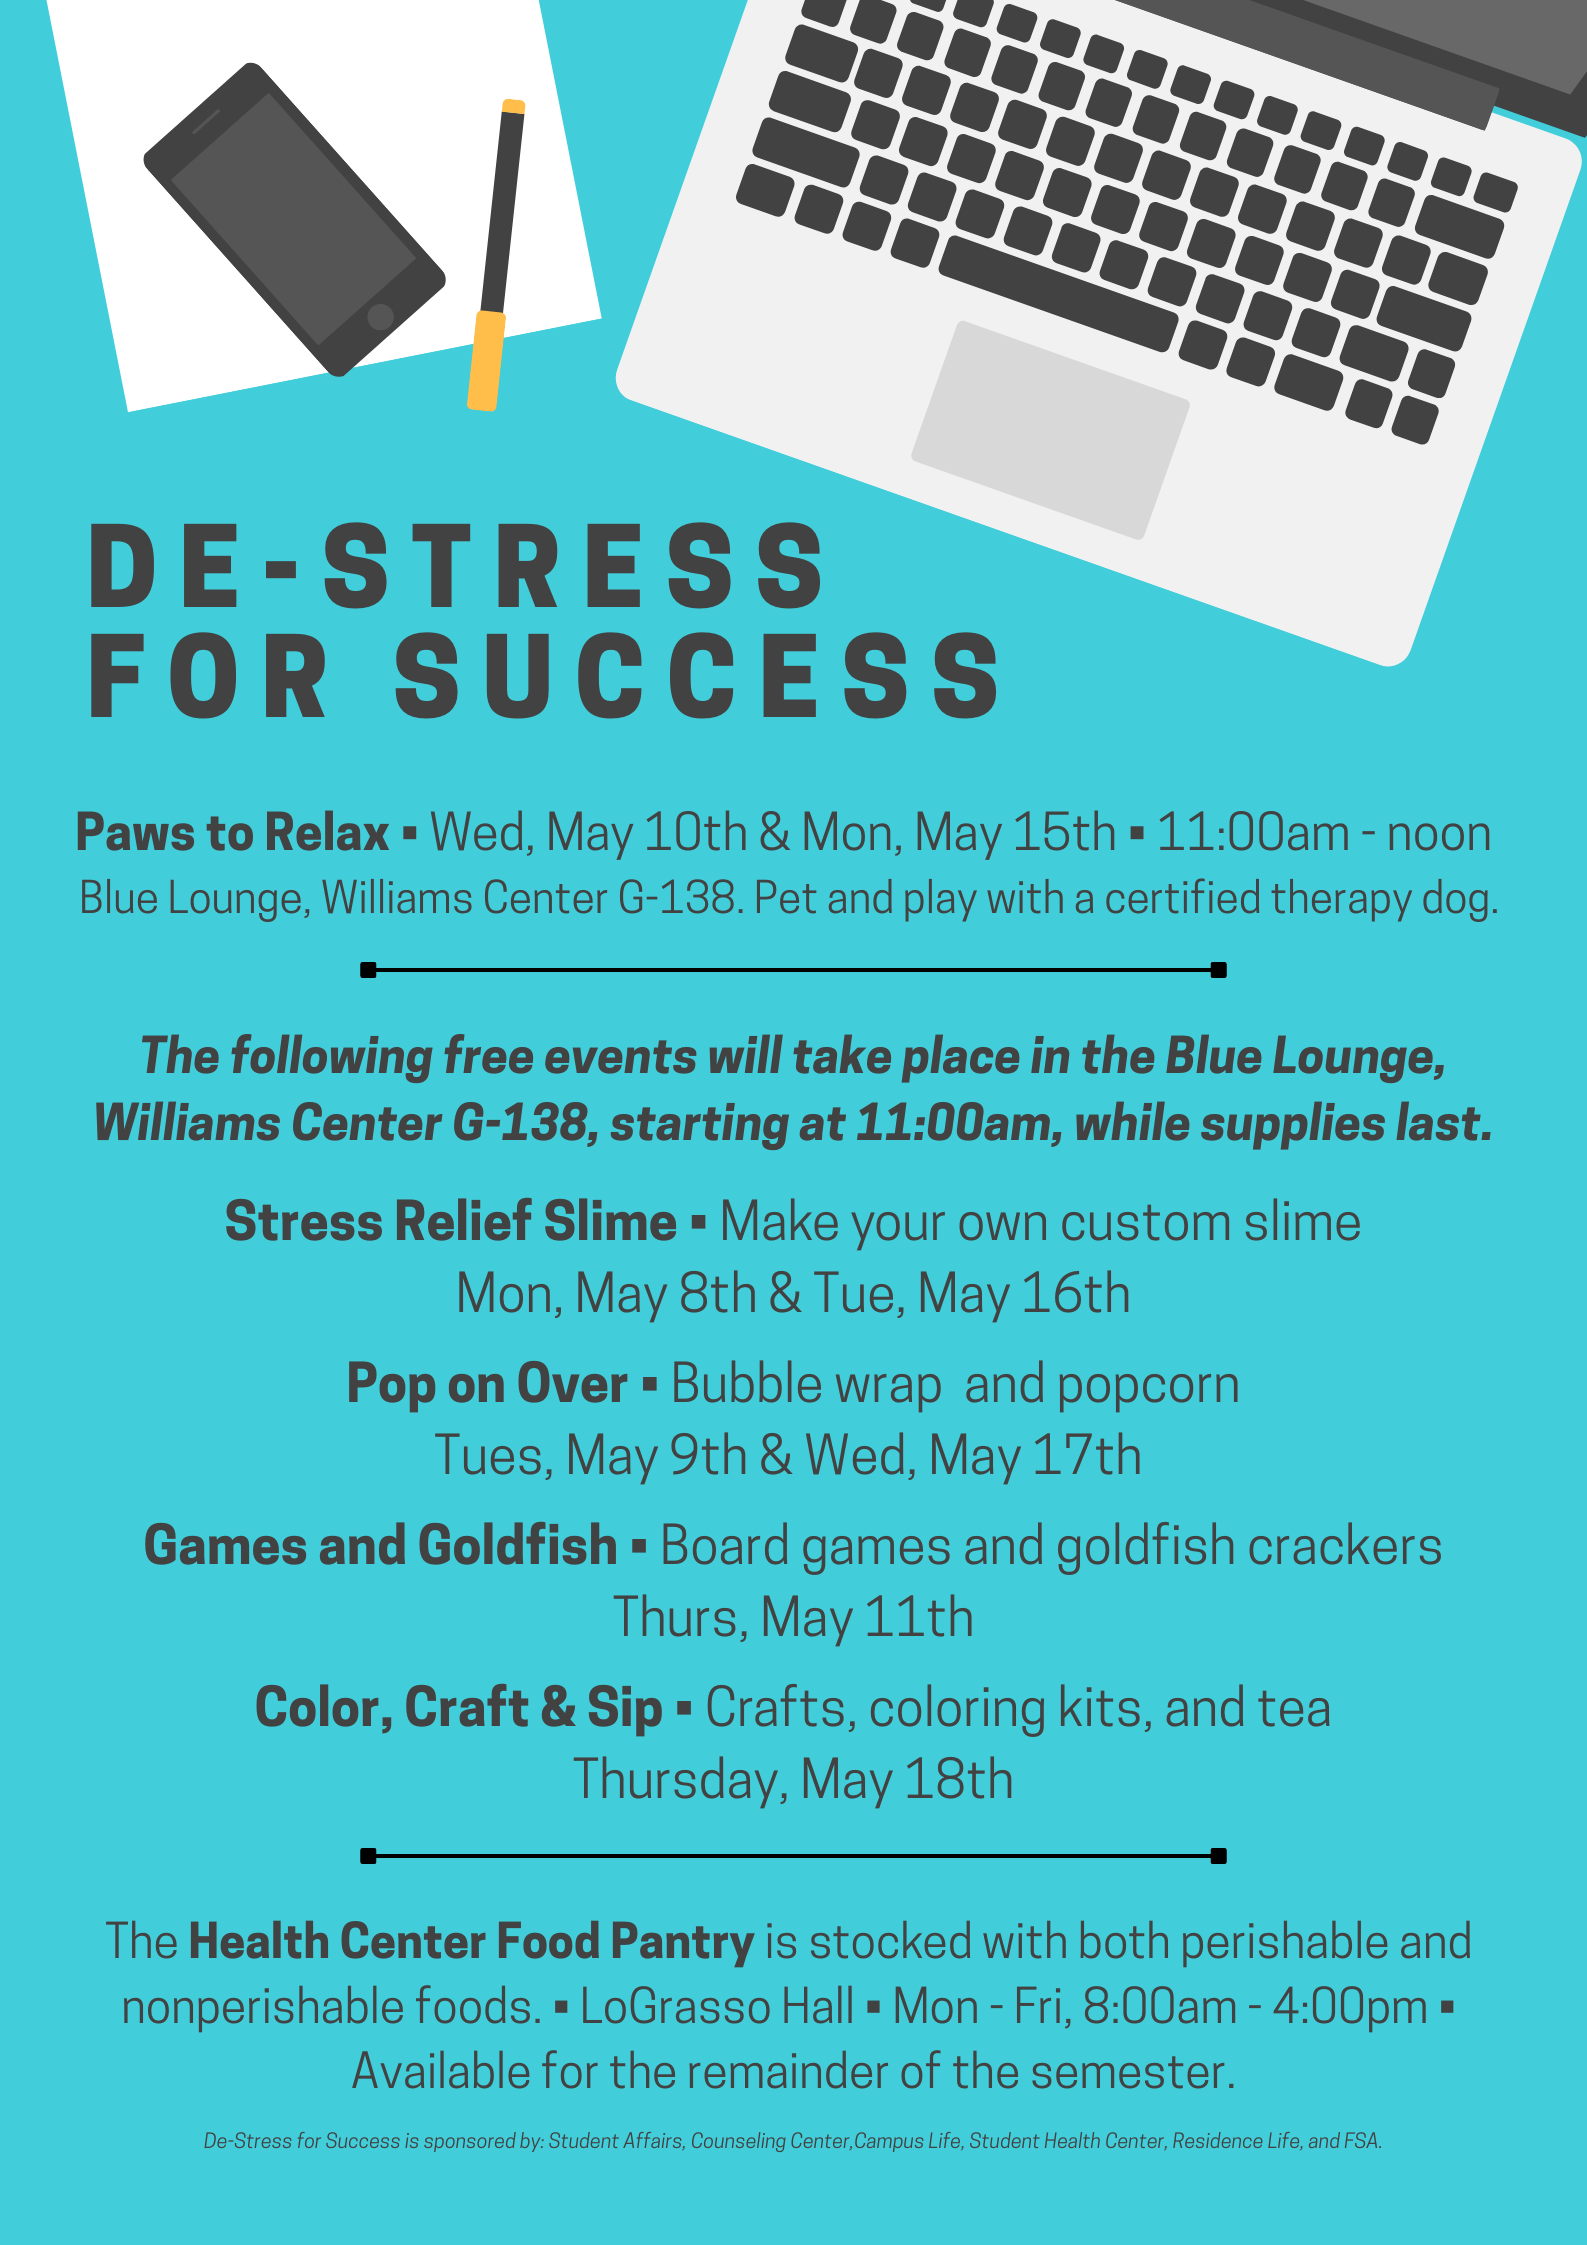 De-Stress for Success